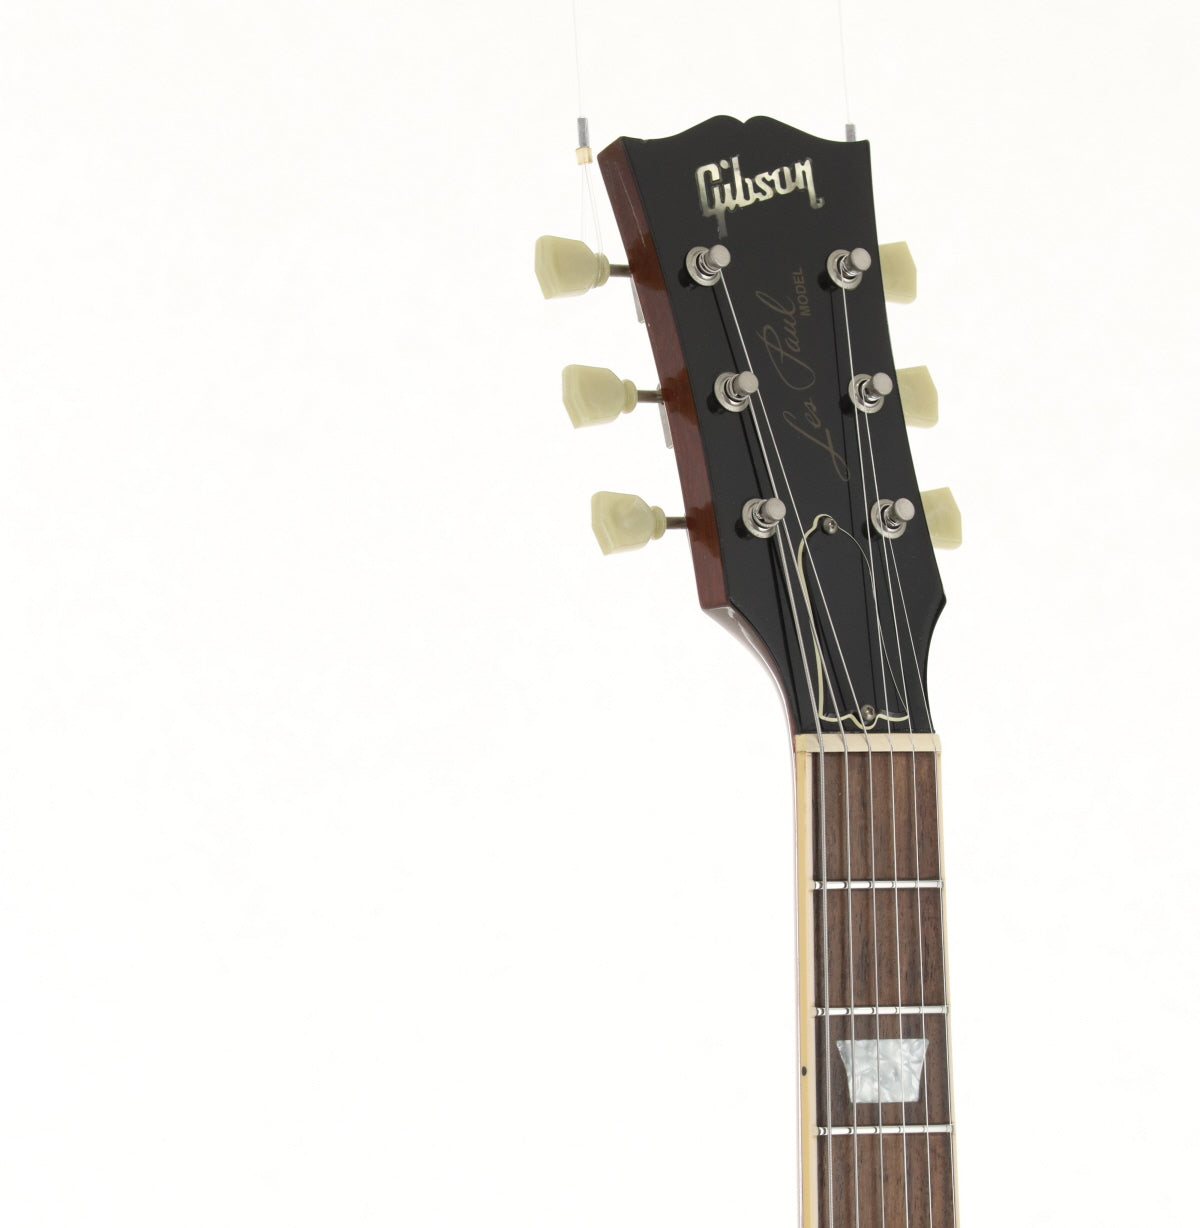 [SN 01953392] USED Gibson Usa / 50s Les Paul Standard Heritage Cherry Sunburst [03]